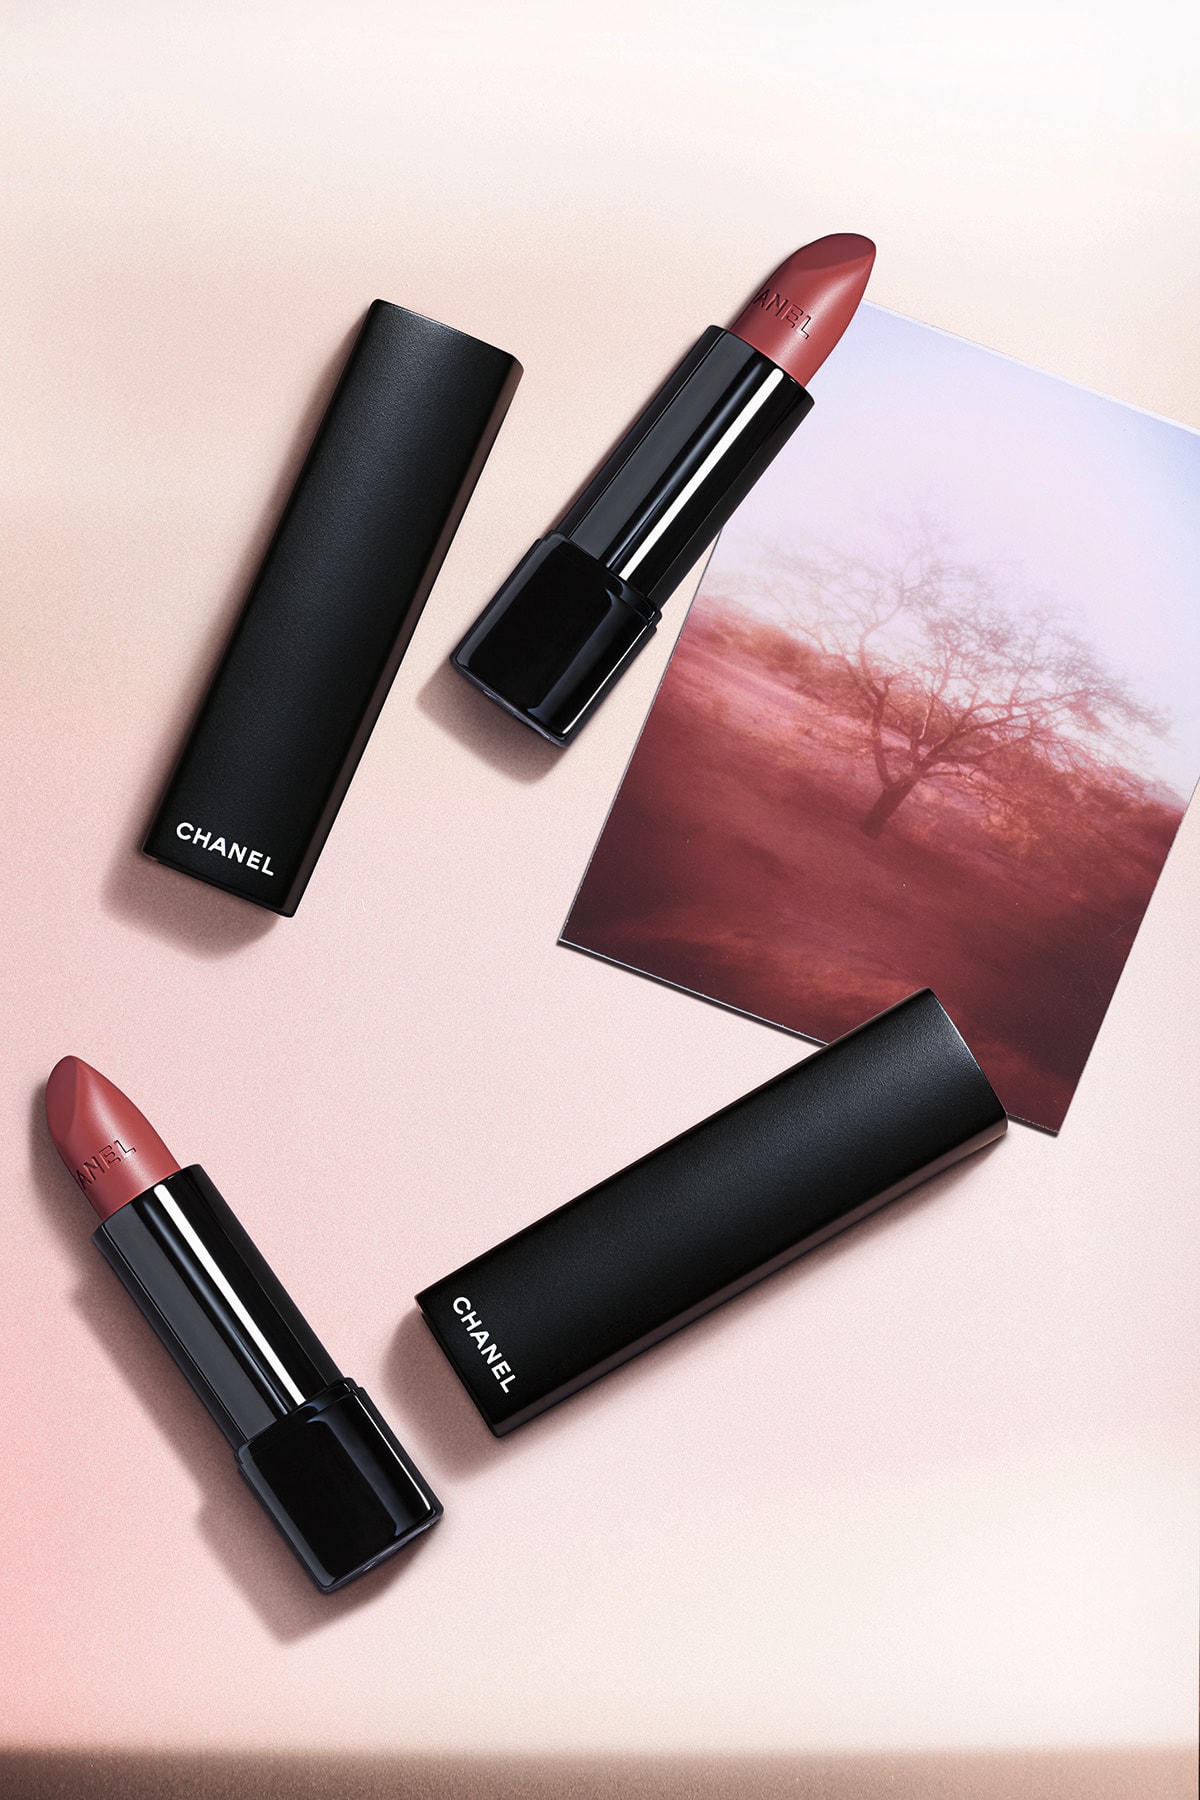 Chanel SS20 "Desert Dream" Makeup Collection Rouge Allure Lipstick